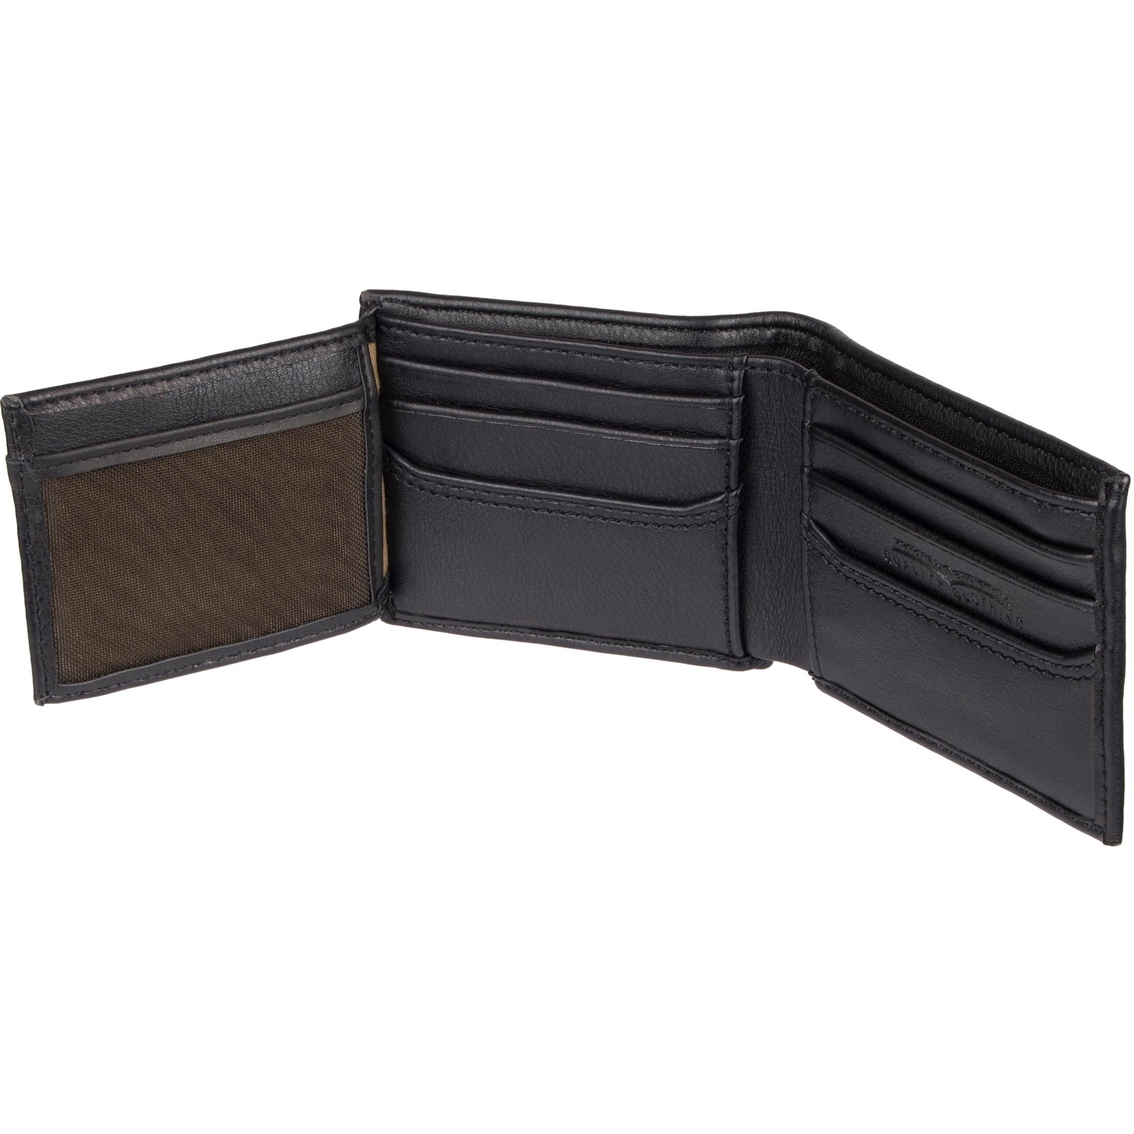 Levi's RFID Extra Capacity Traveler Wallet with Zipper Pocket - Image 3 of 5